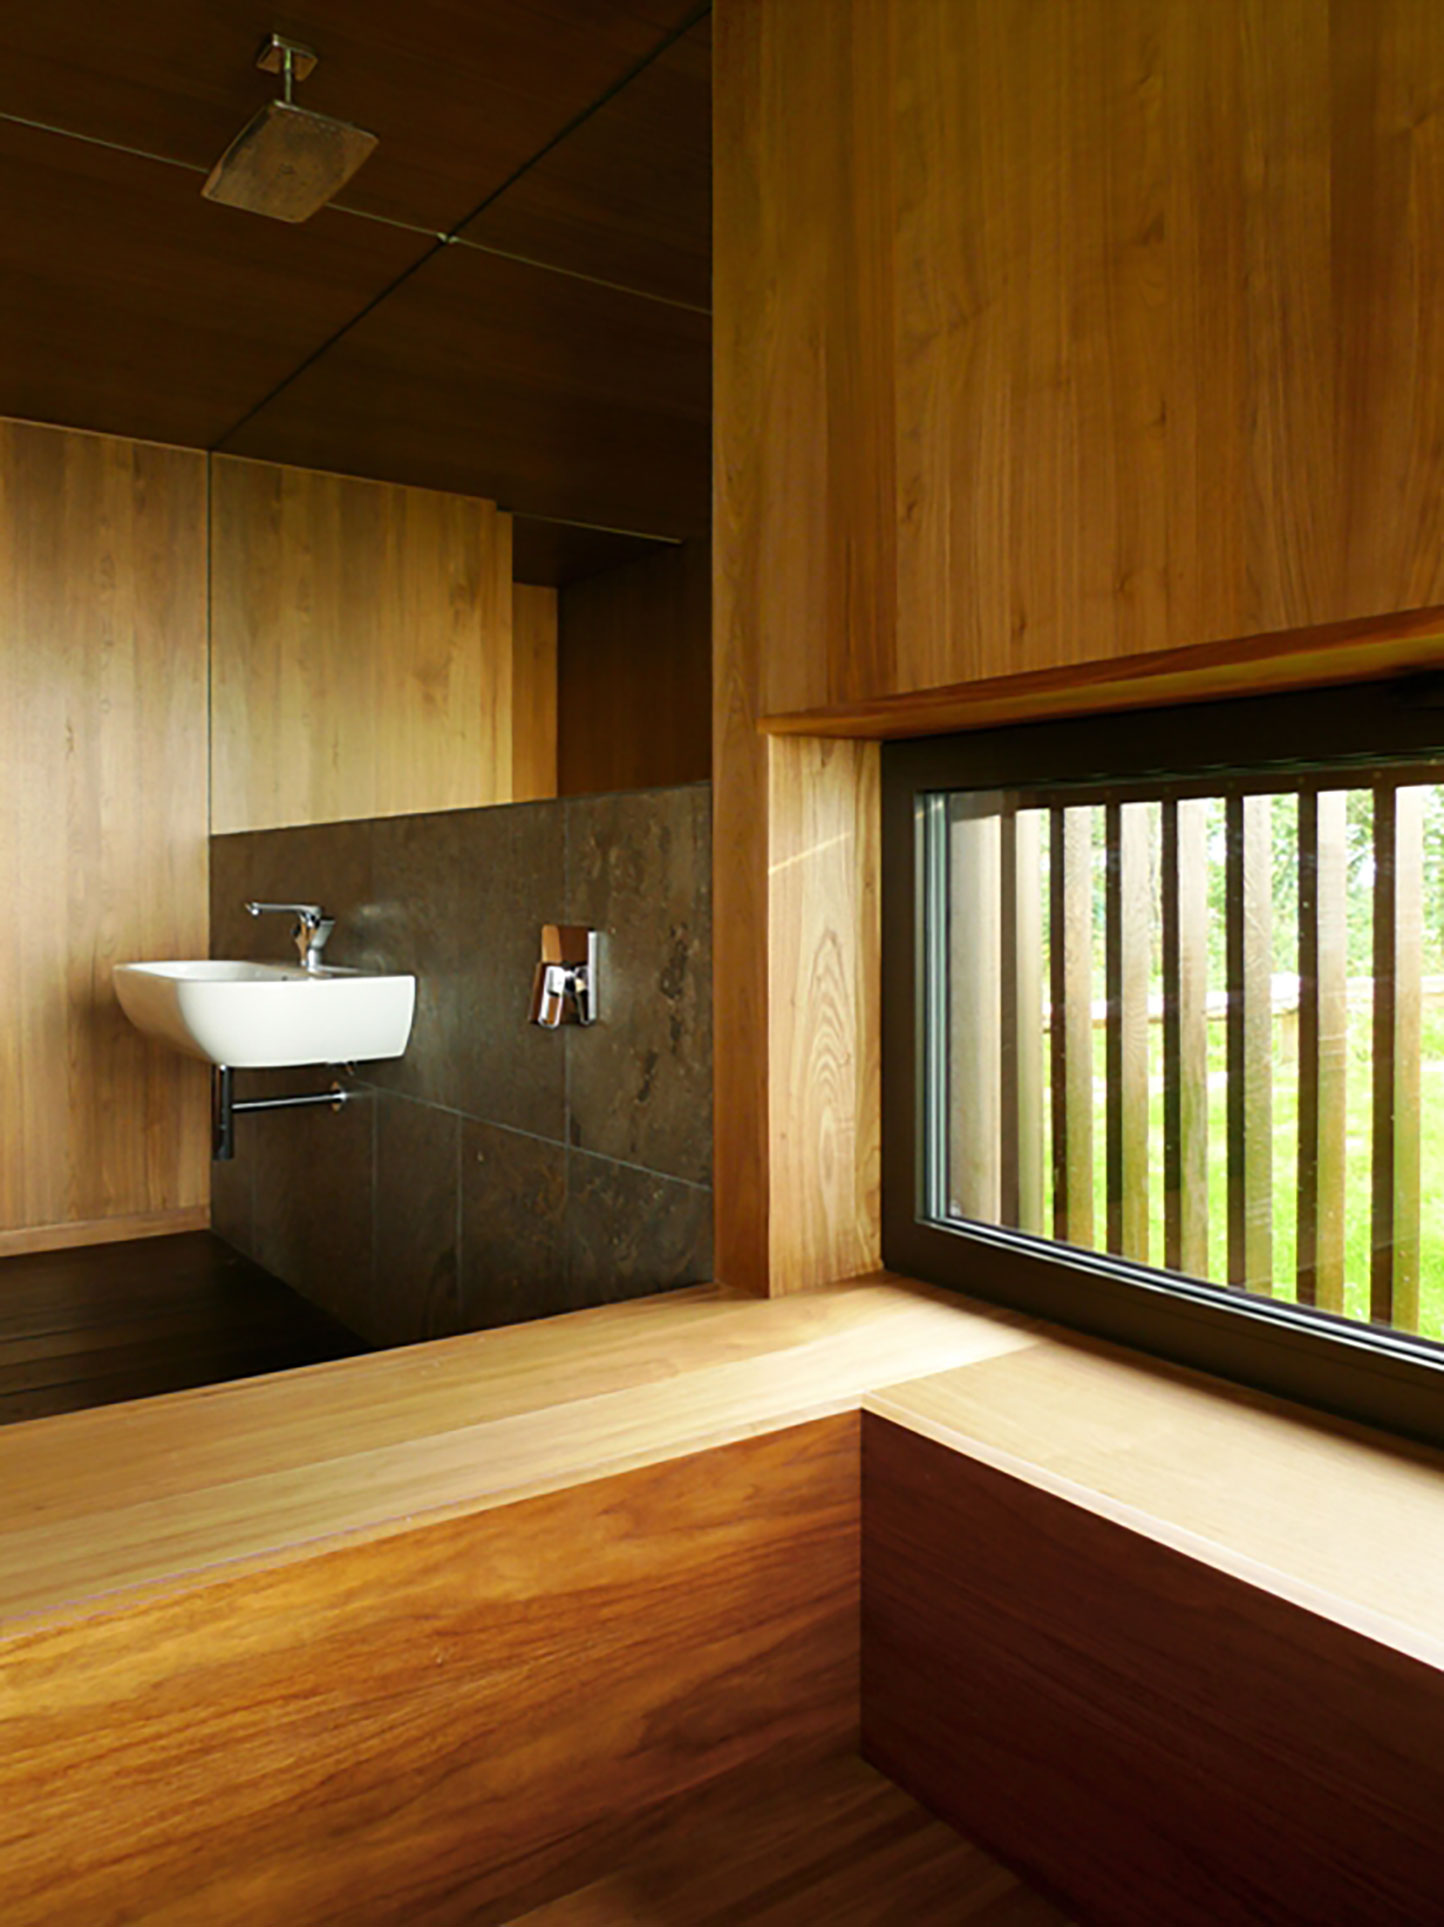 Image no. 4 of Custom Ofuro wooden bathtub - Diener und Diener